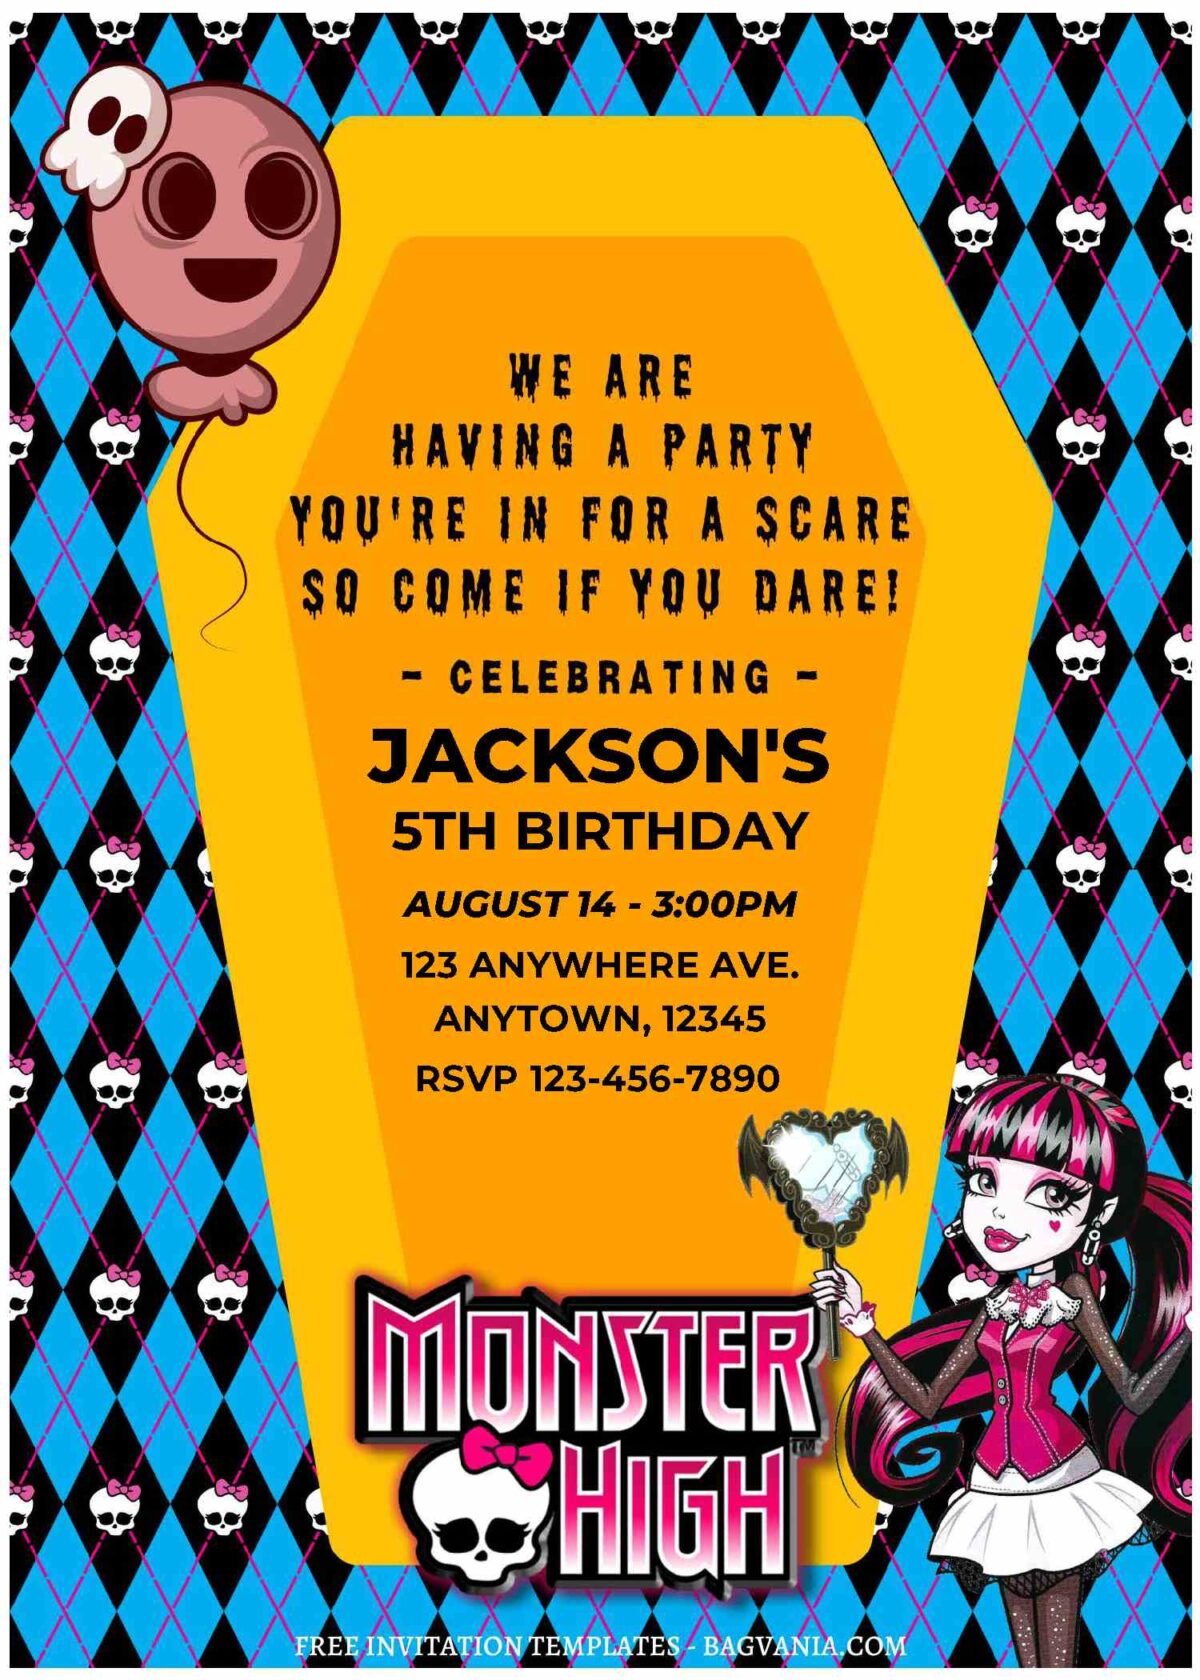 (Free Editable PDF) Lovely Monster High Birthday Invitation Templates C